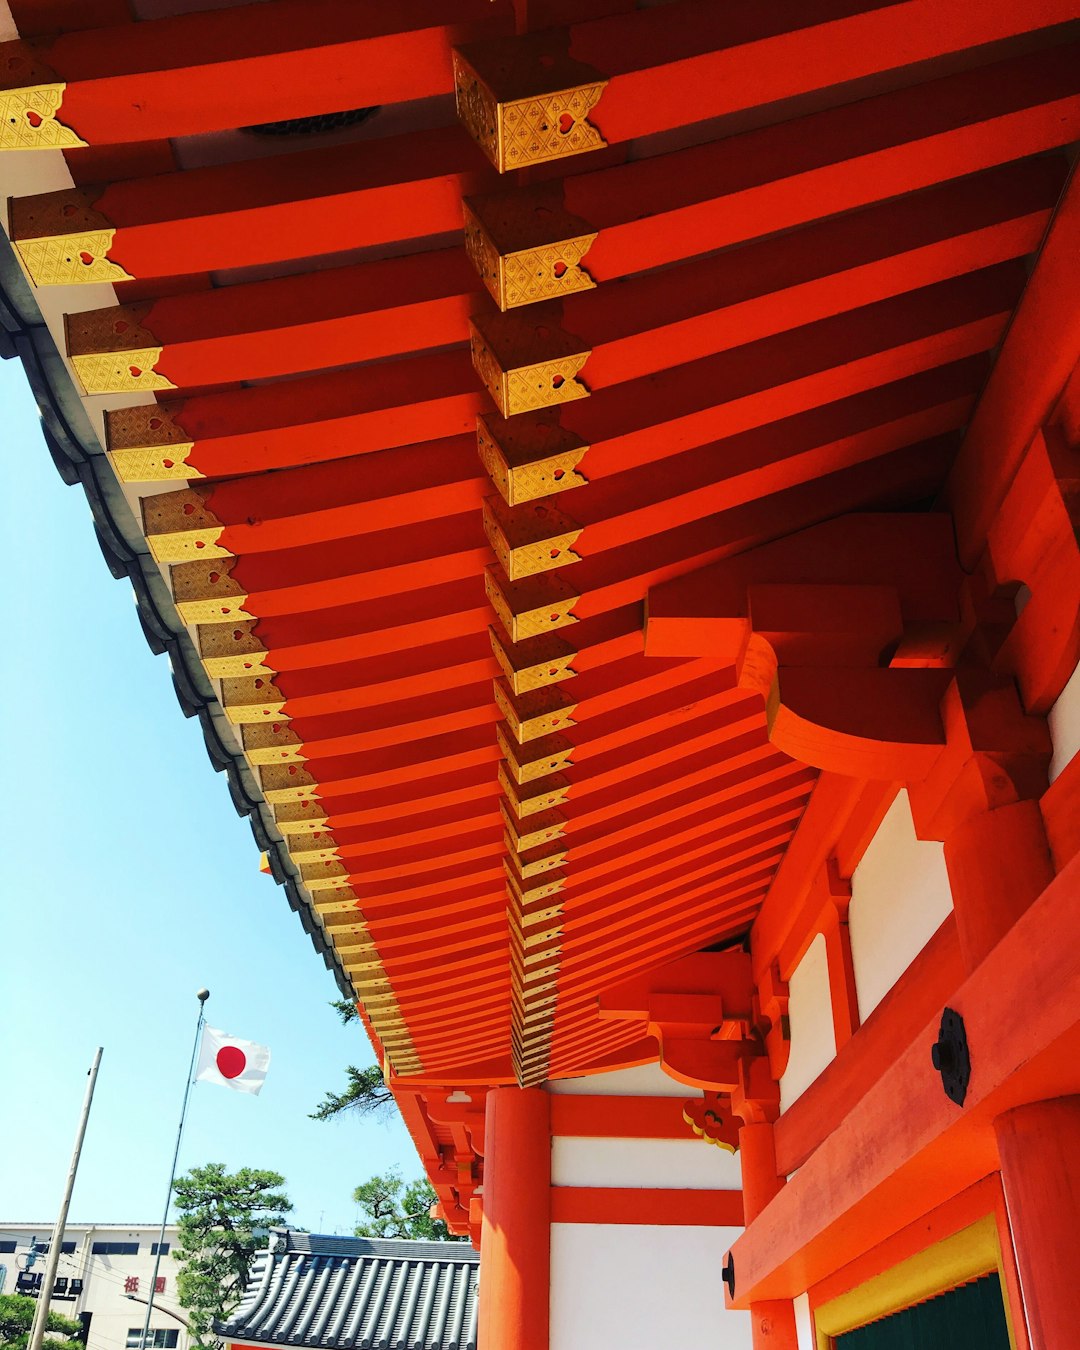 travelers stories about Place of worship in Yasaka Shrine, Japan